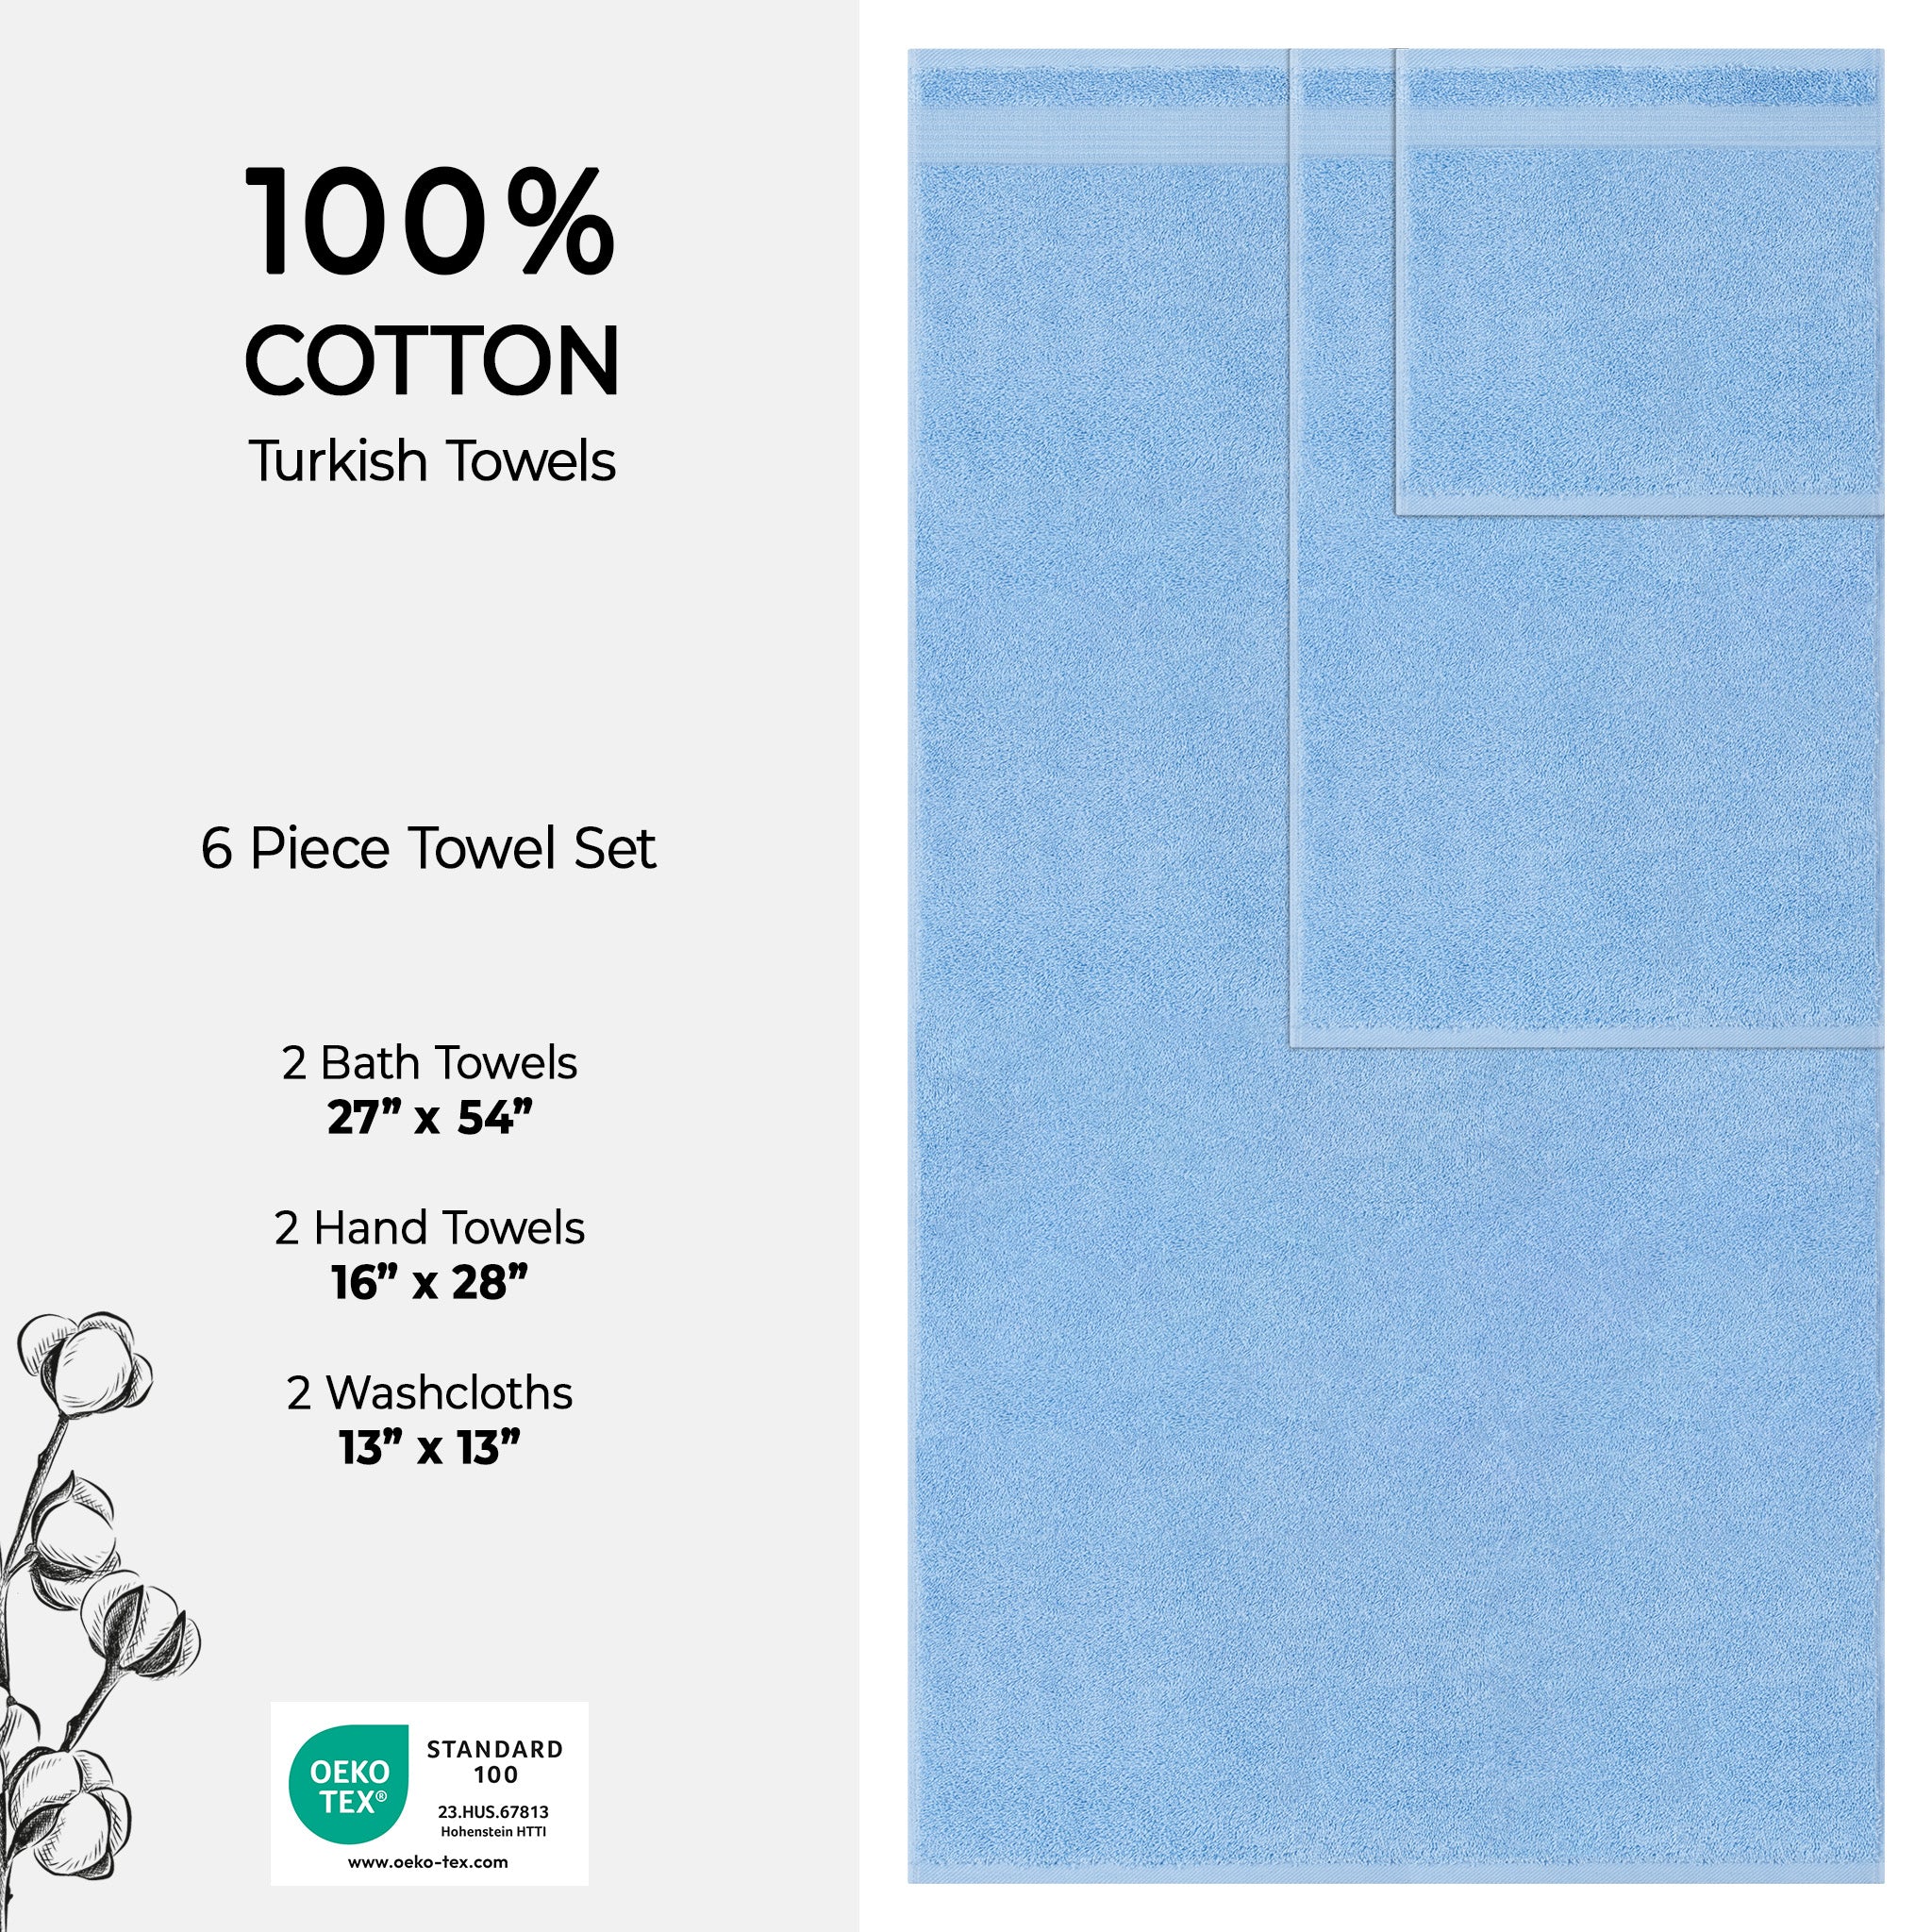 American Soft Linen Bekos 100% Cotton Turkish Towels 6 Piece Bath Towel Set -sky-blue-04